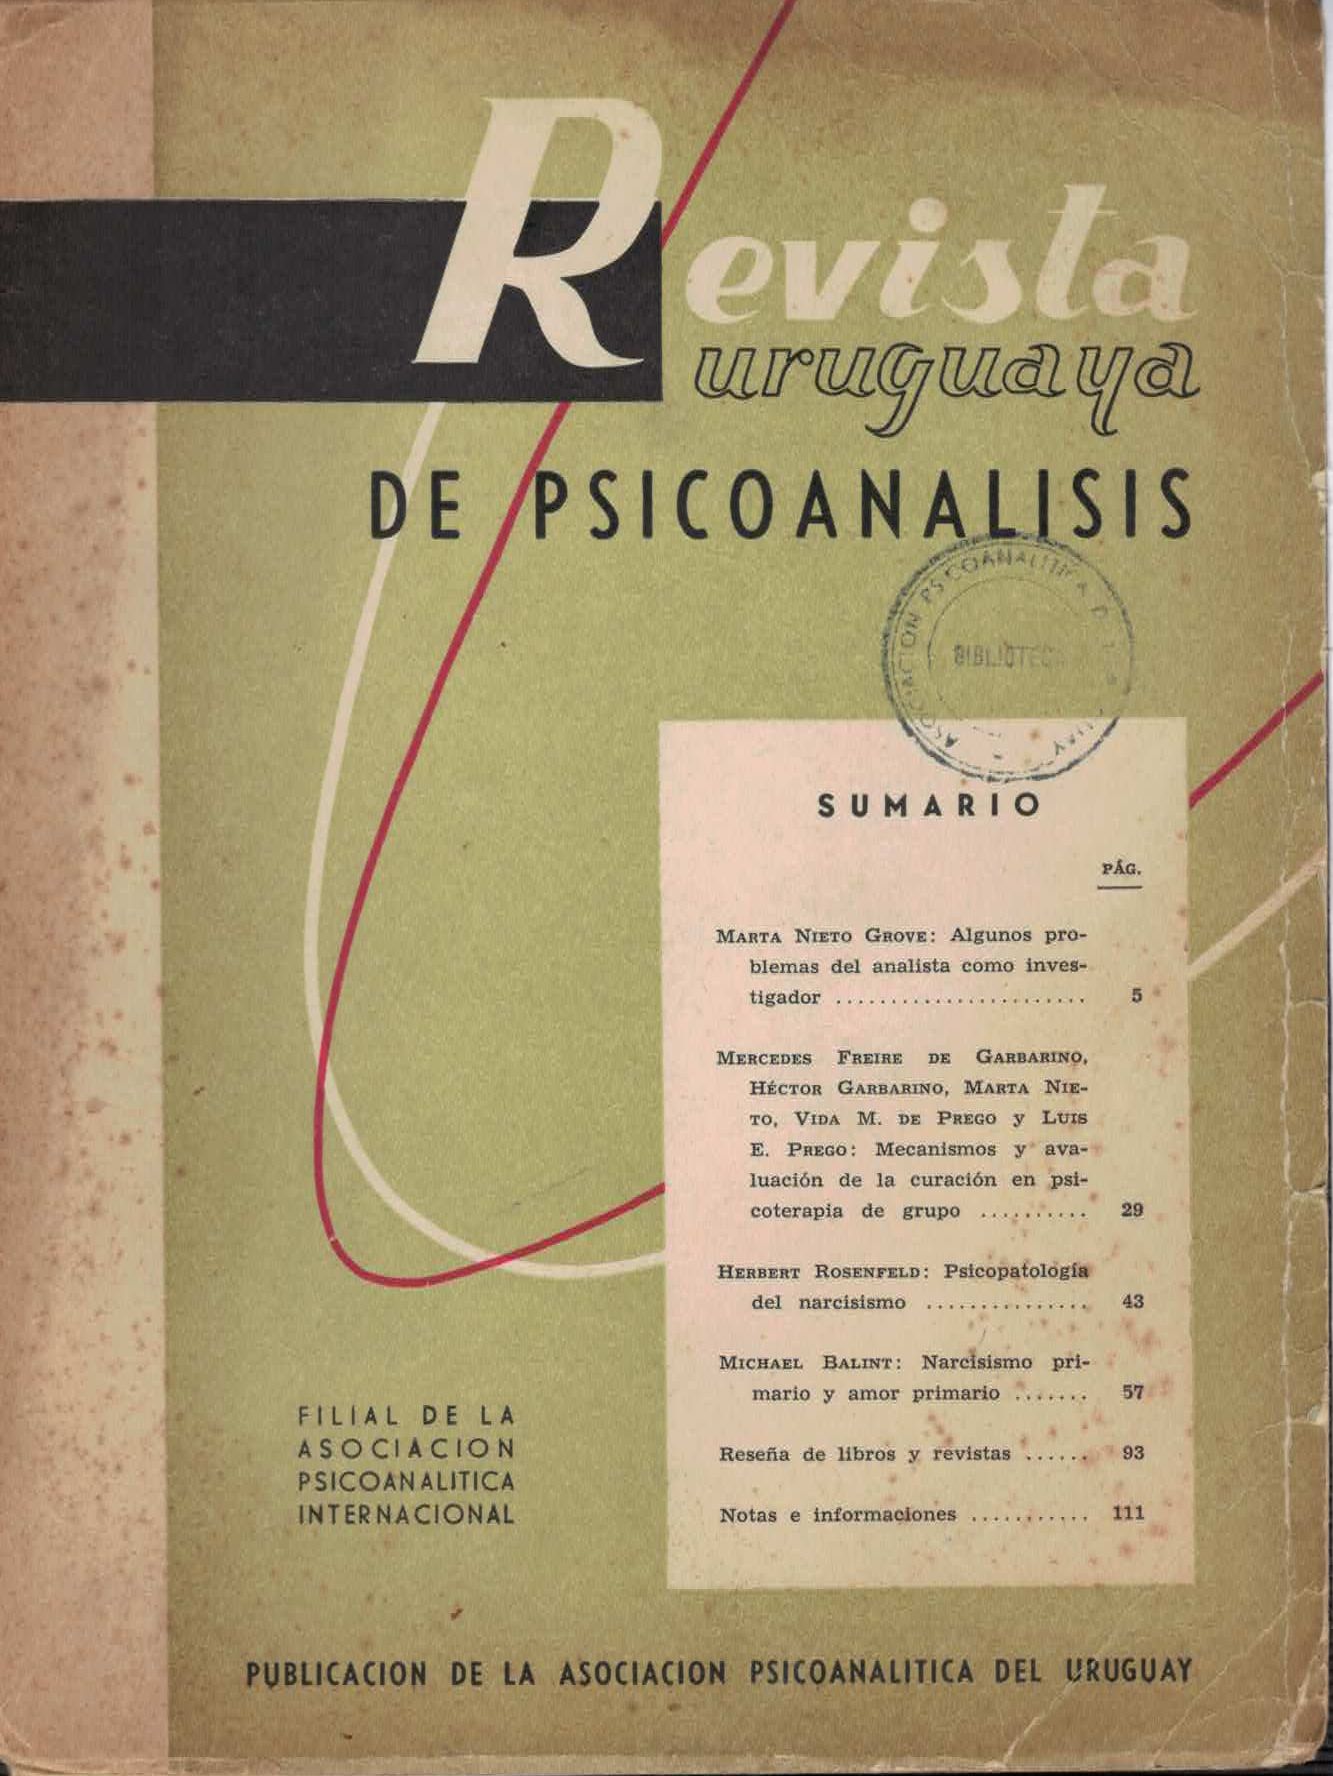 					Ver Vol. 7 Núm. 1 (1965): Revista Uruguaya de Psicoanálisis
				